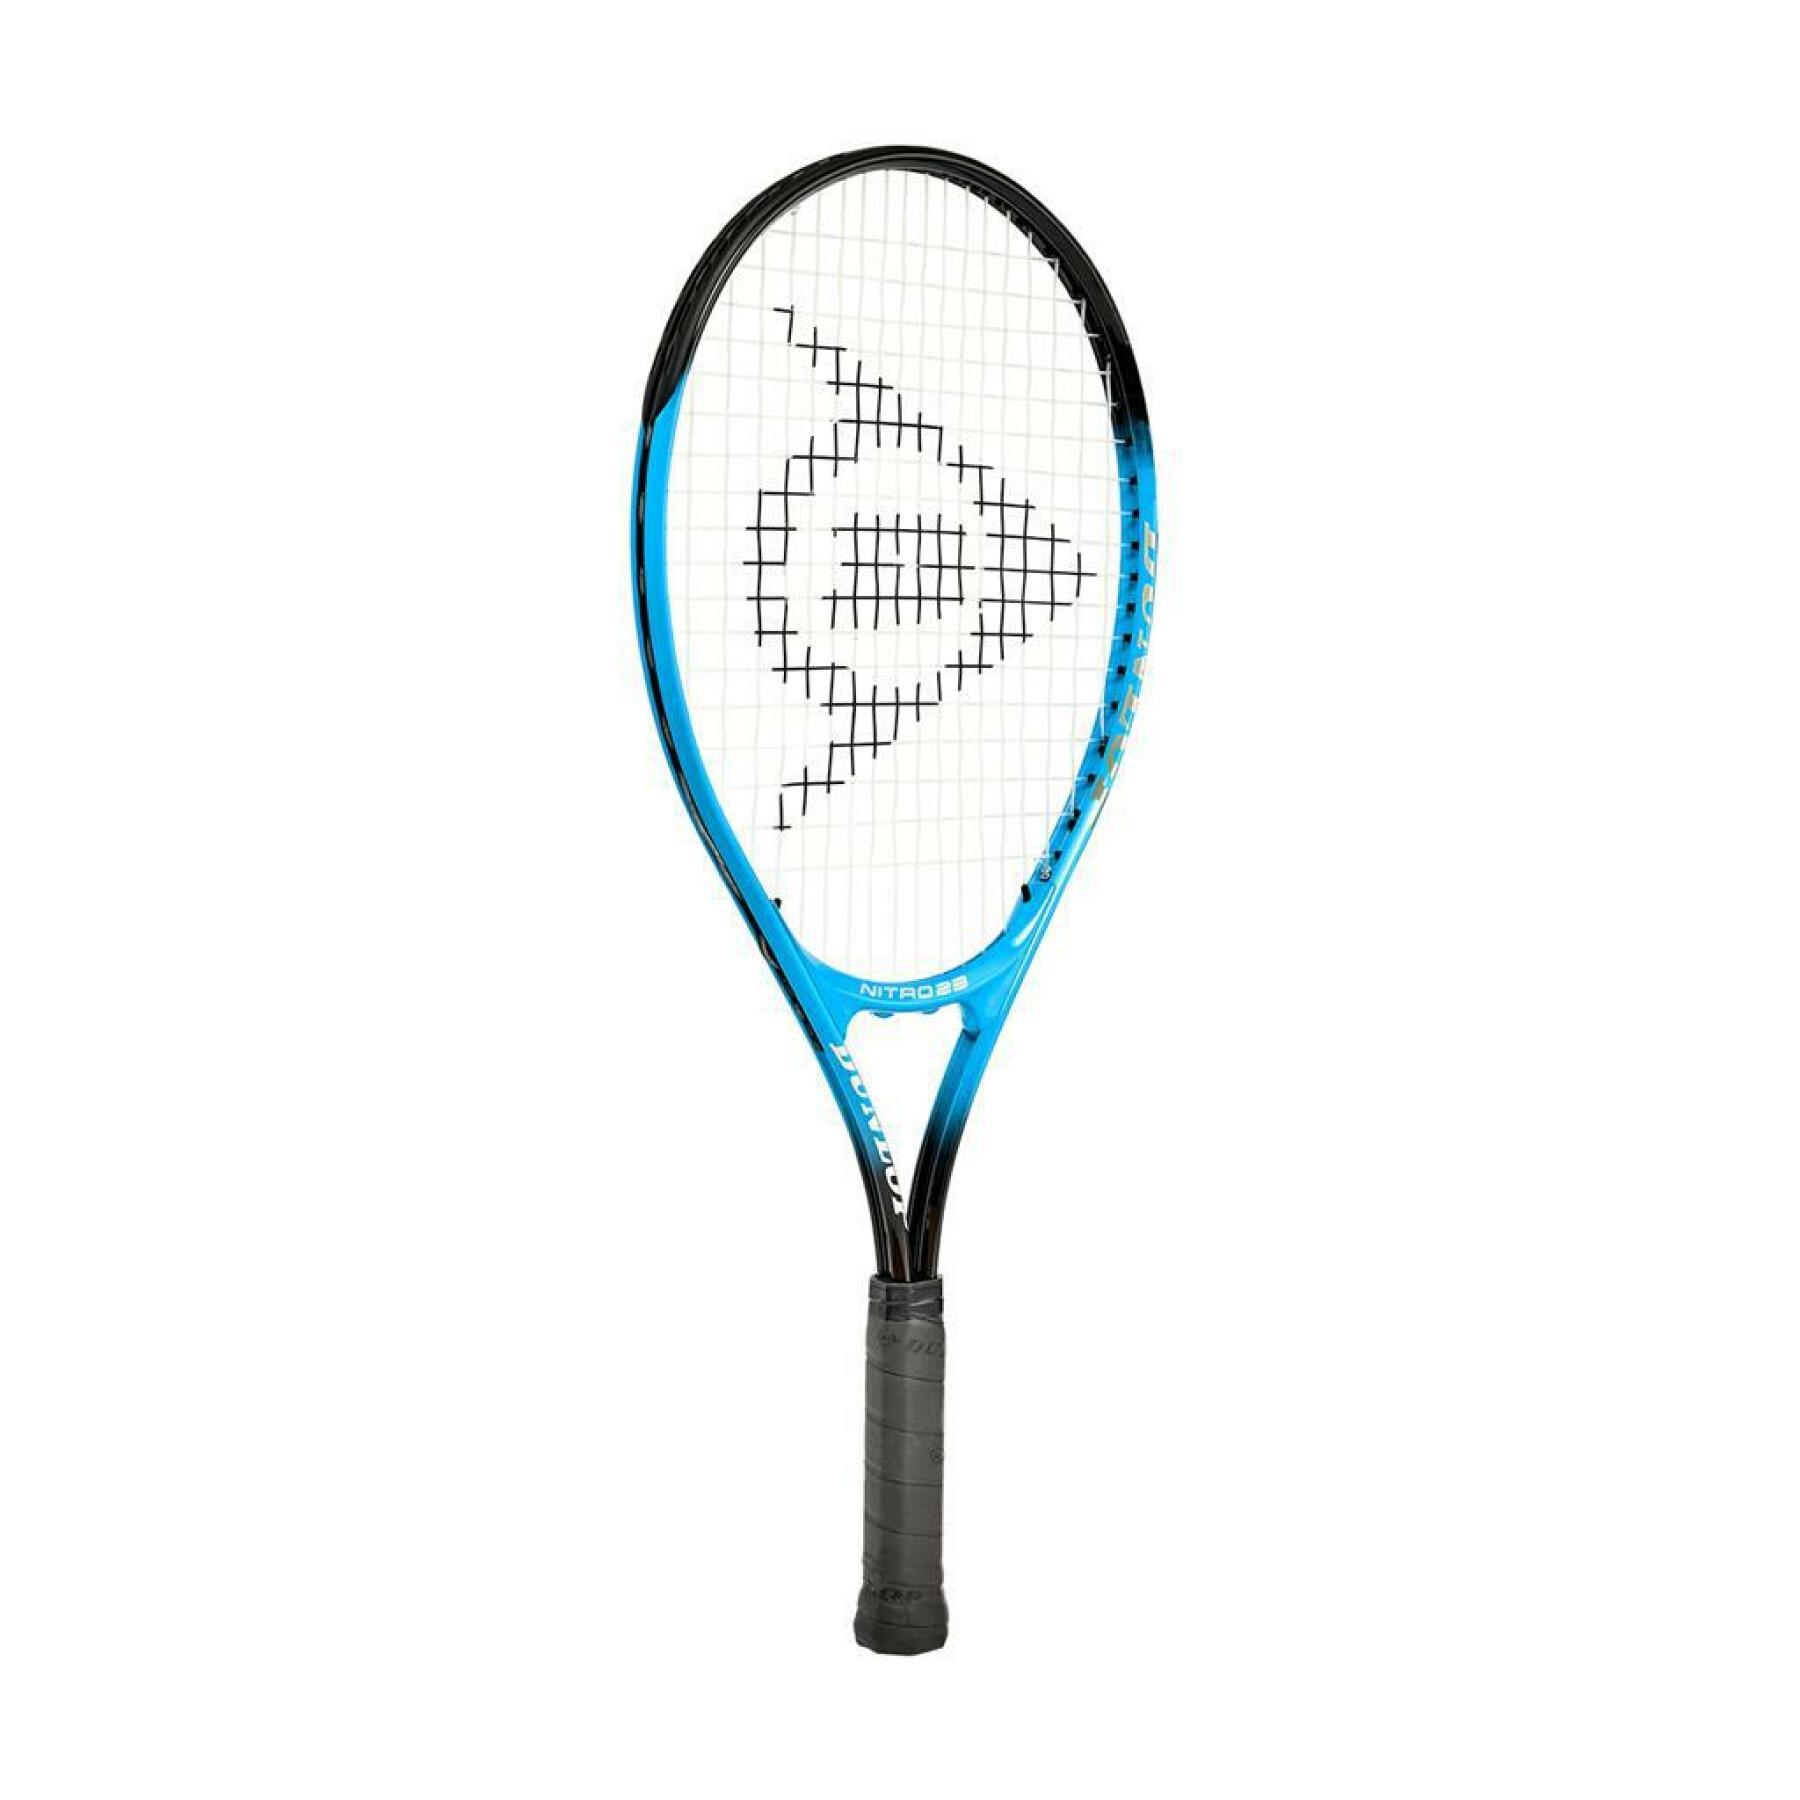 Barnens racket Dunlop nitro 23 g00